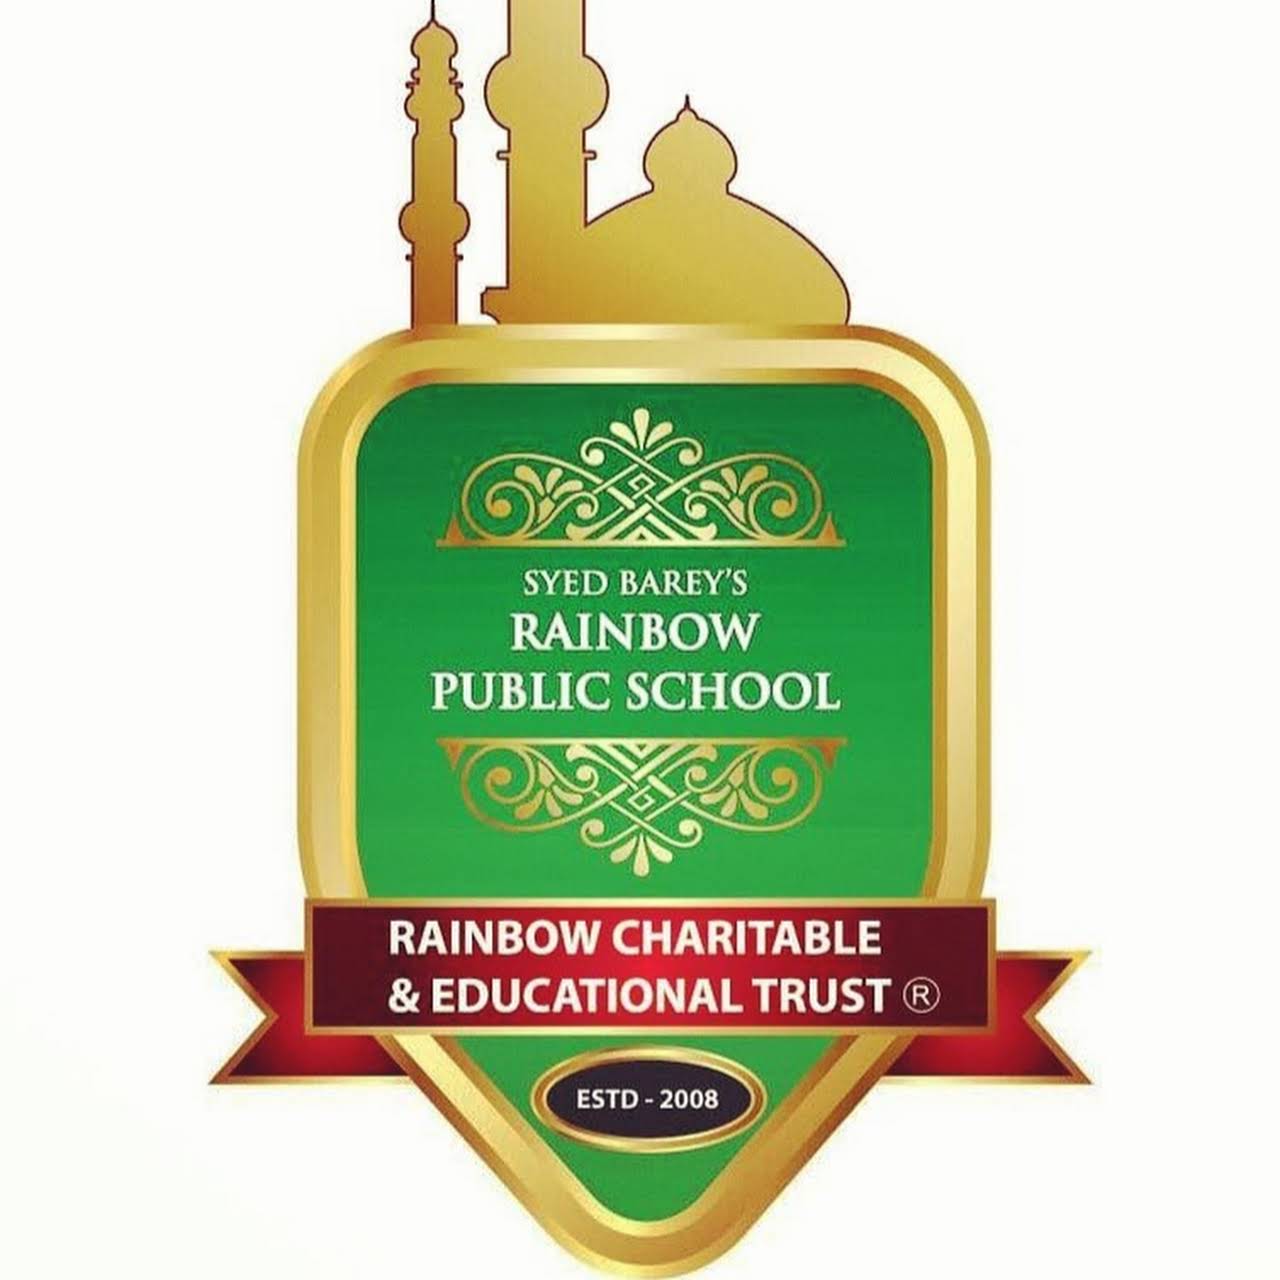 Syed barey's Rainbow Public School|Colleges|Education